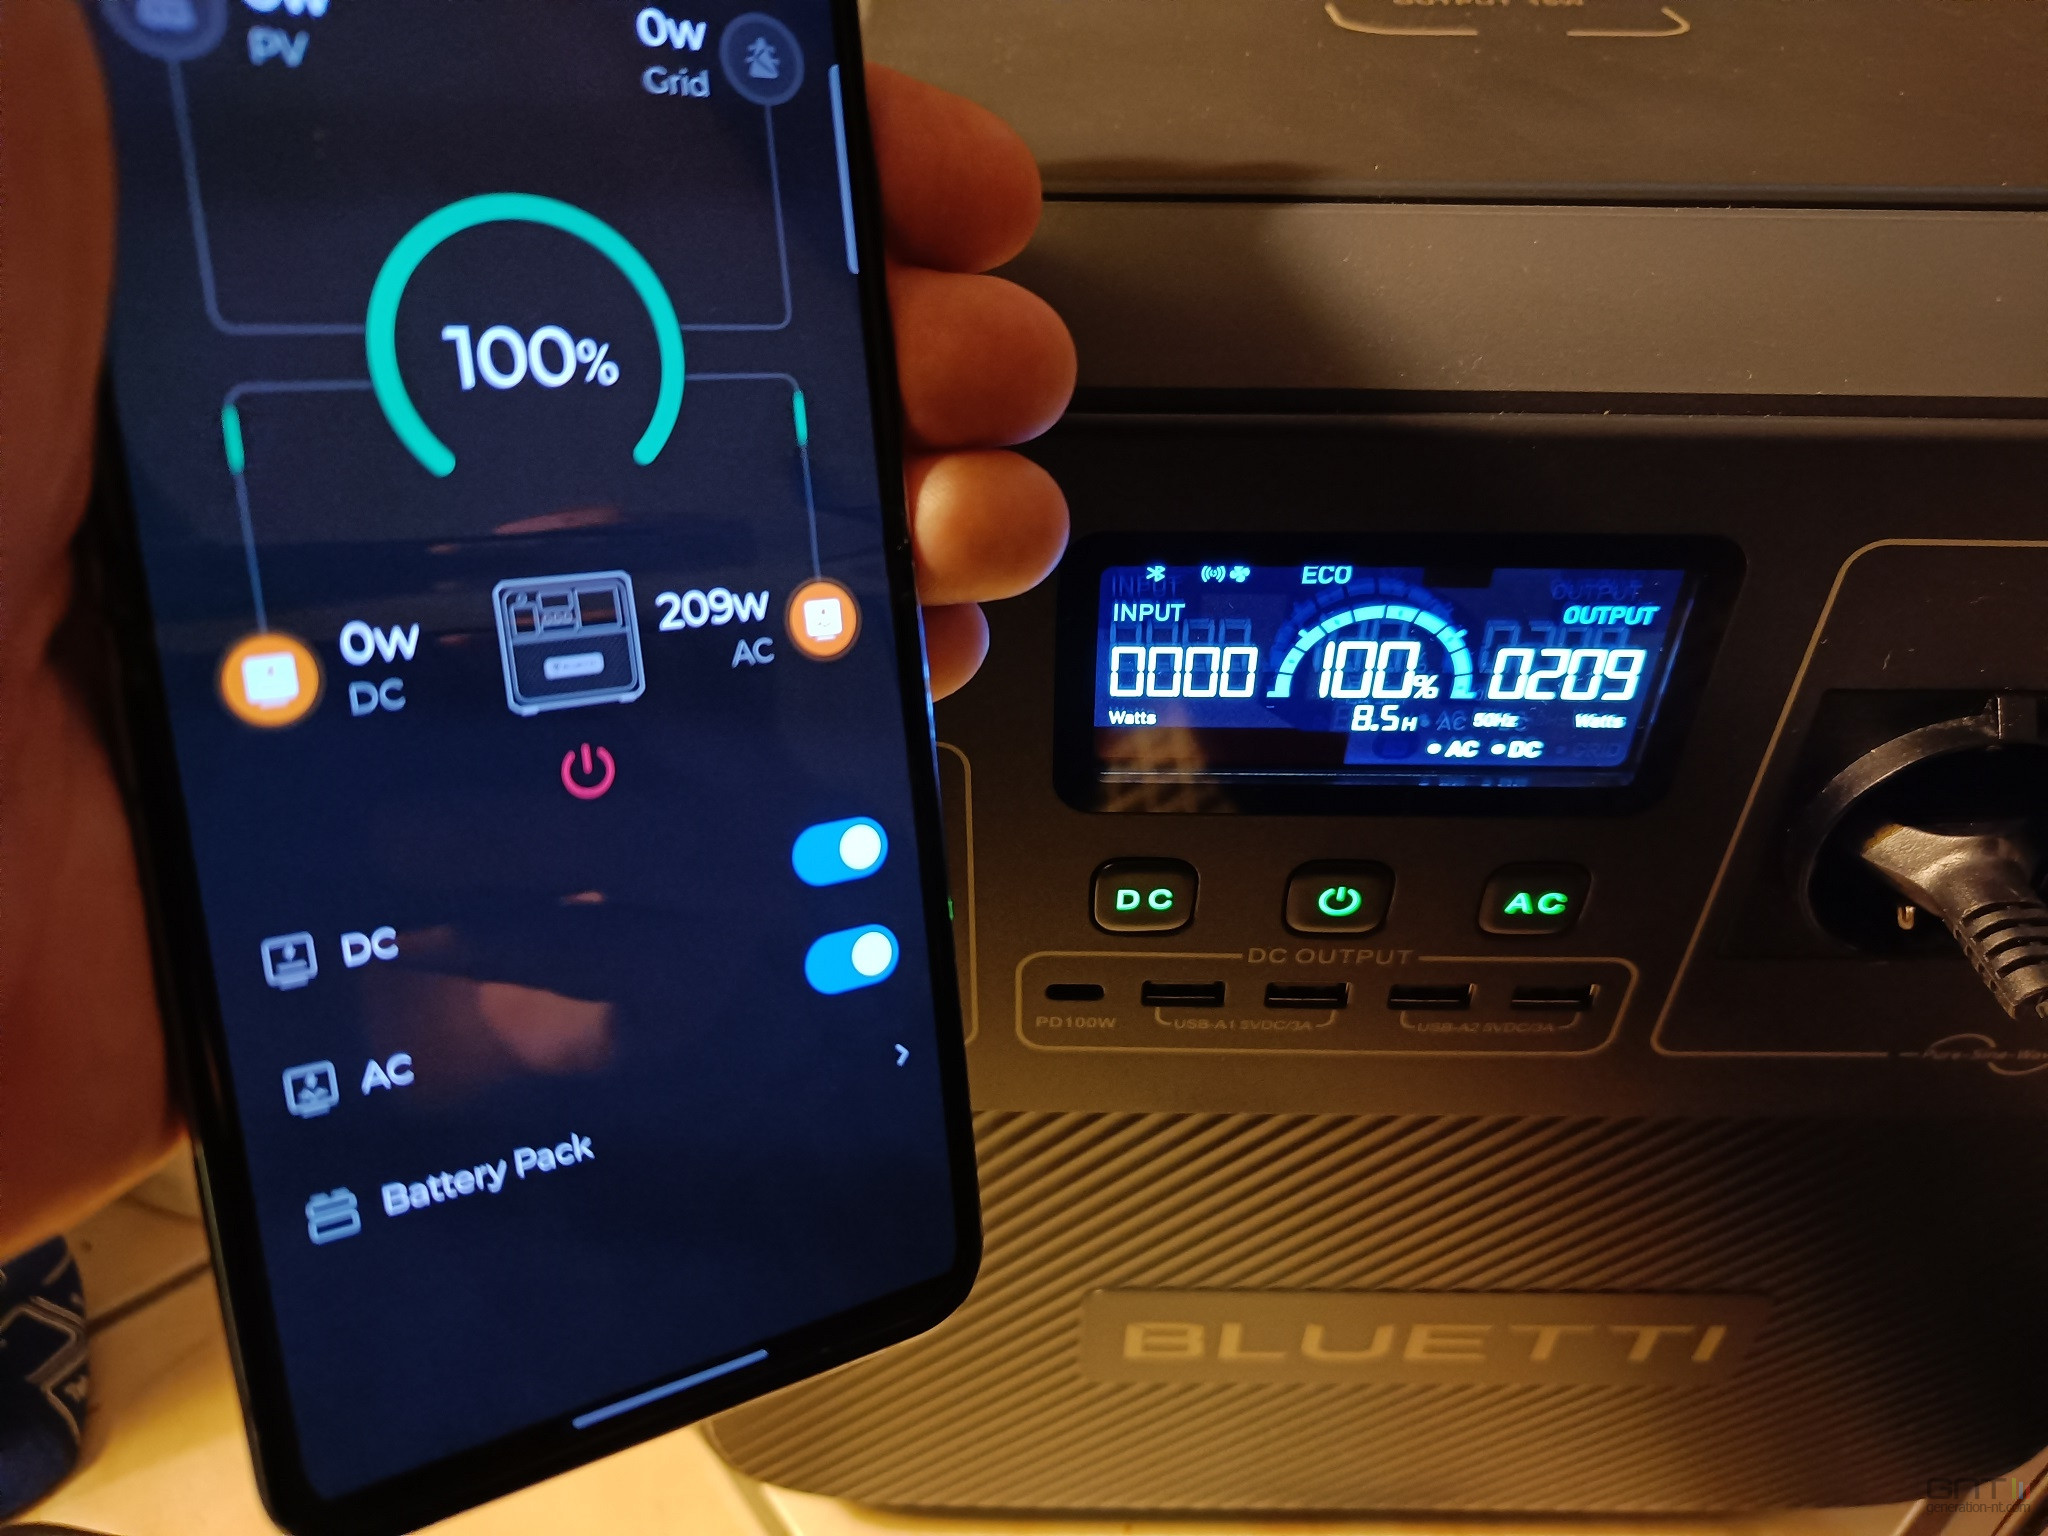 Bluetti AC180 interfaces